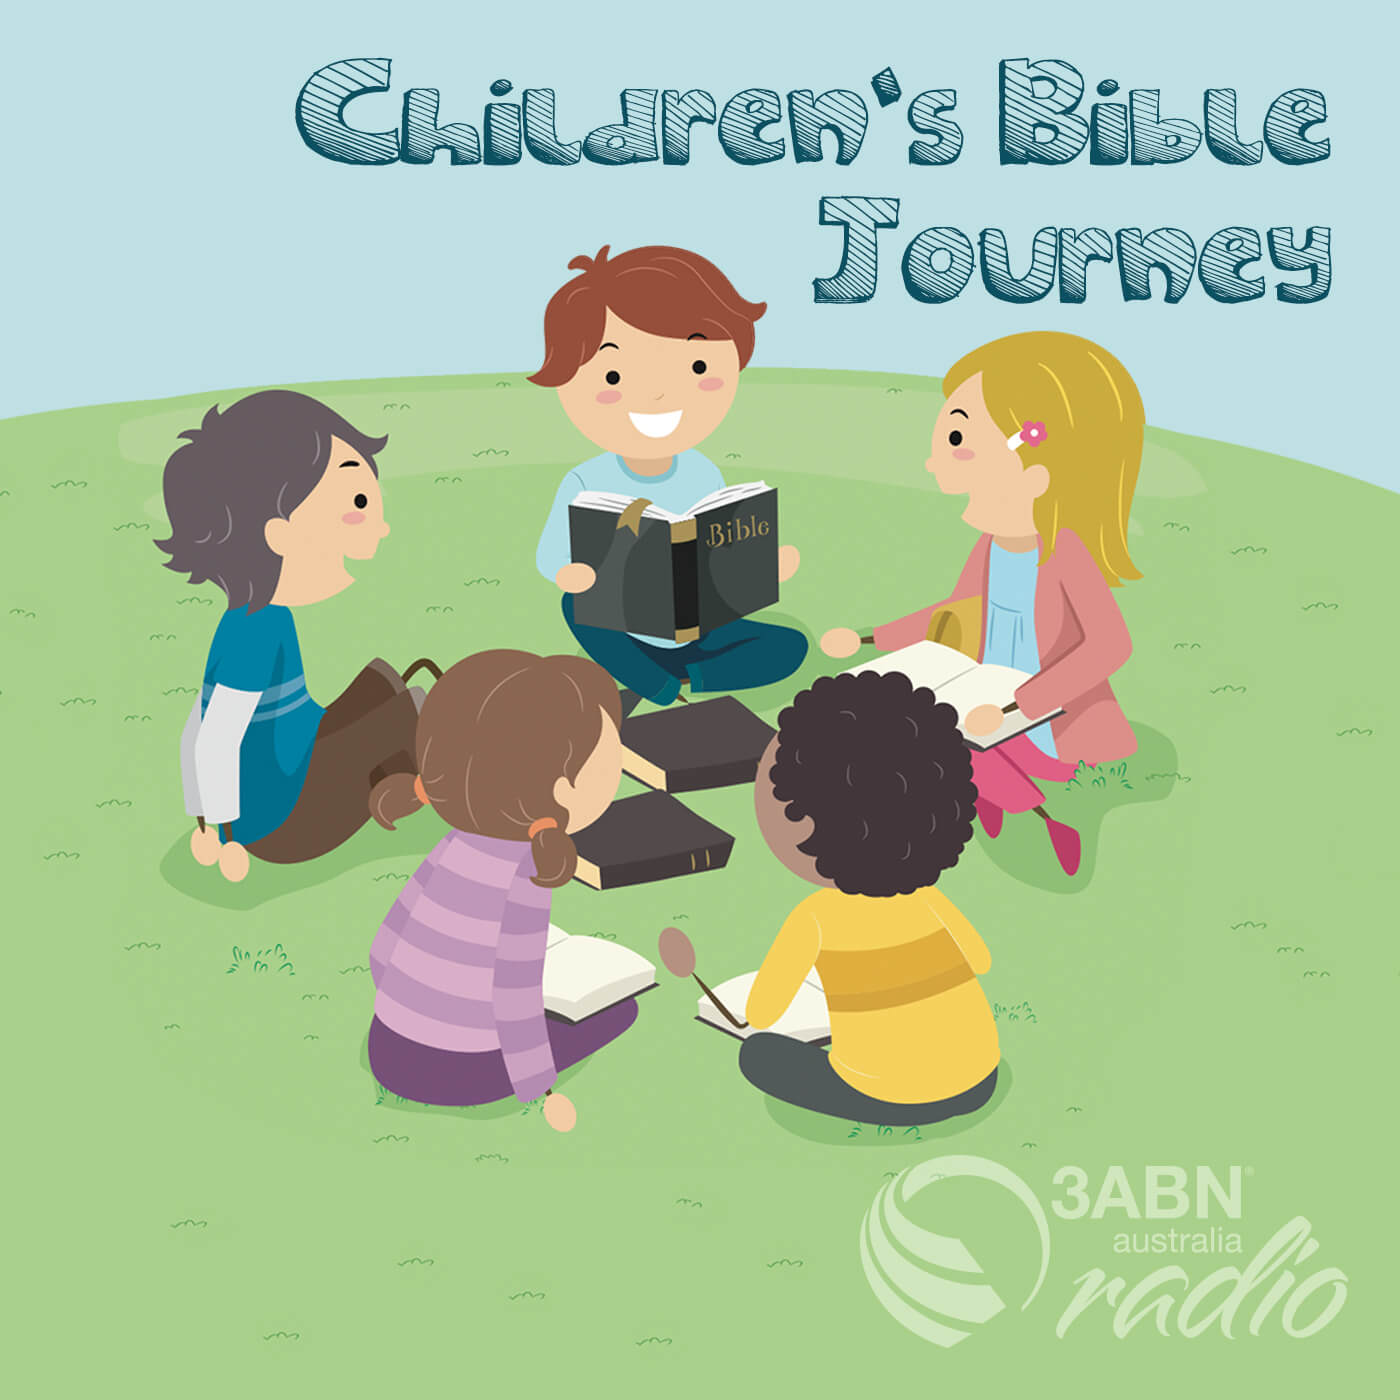 Children's Bible Journey - 2211